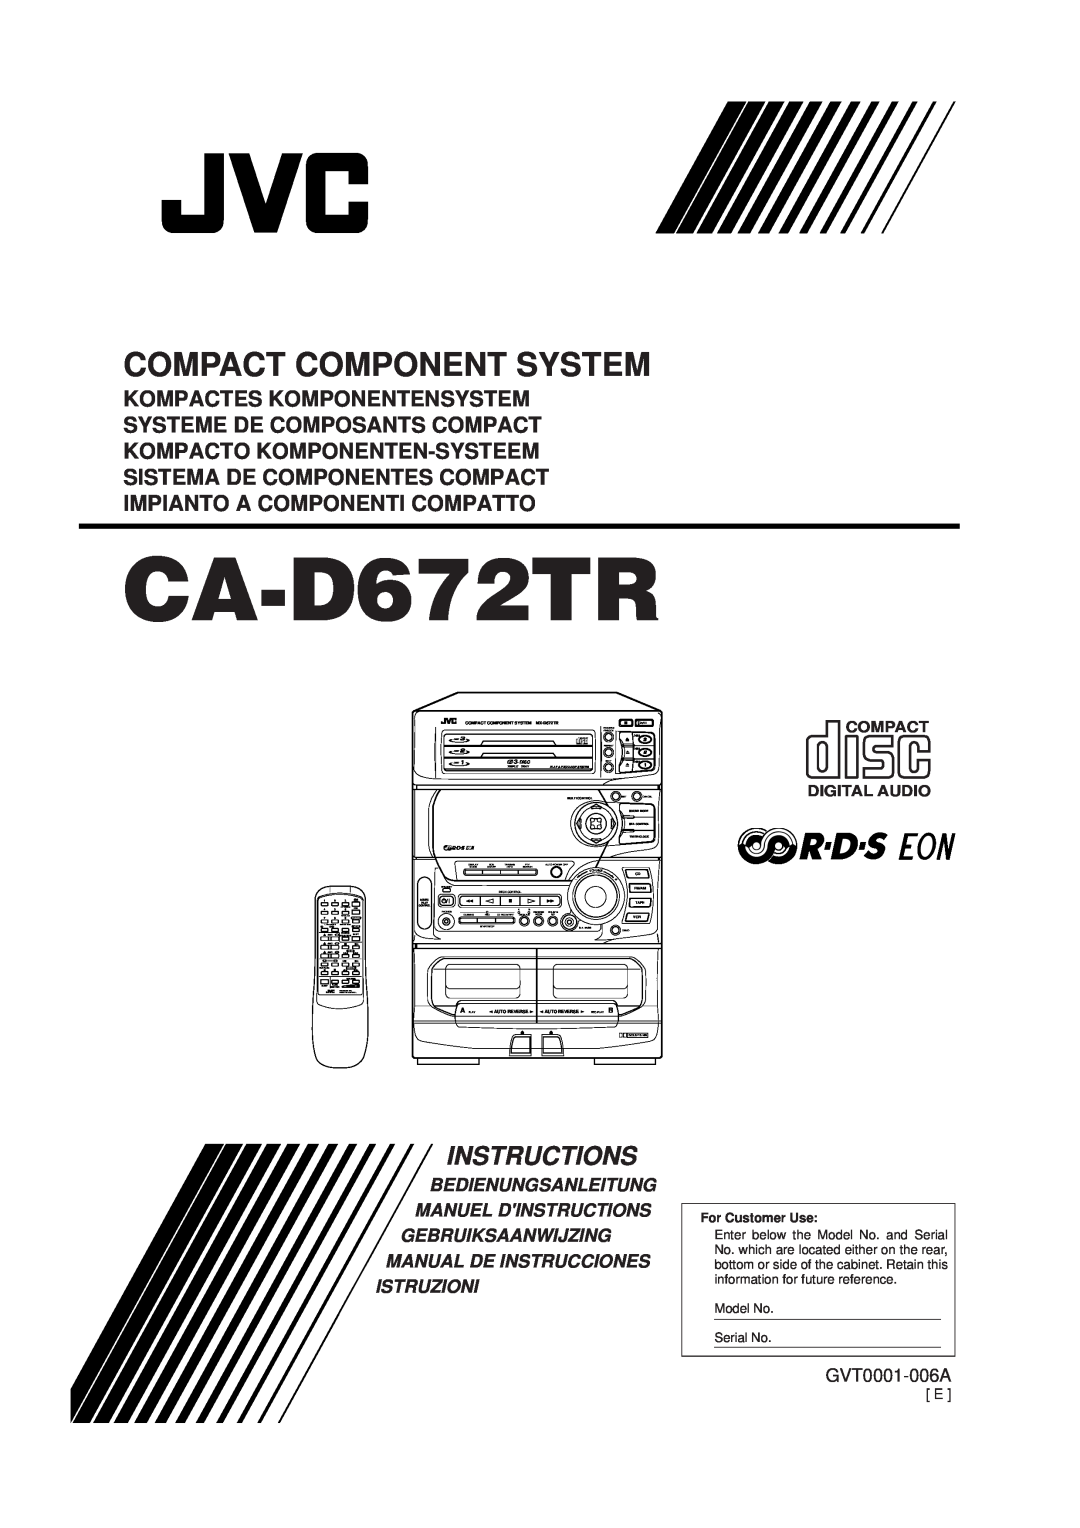 JVC CA-D672TR manual Compact Component System, Instructions, Bedienungsanleitung Manuel Dinstructions, Istruzioni, Tuner 